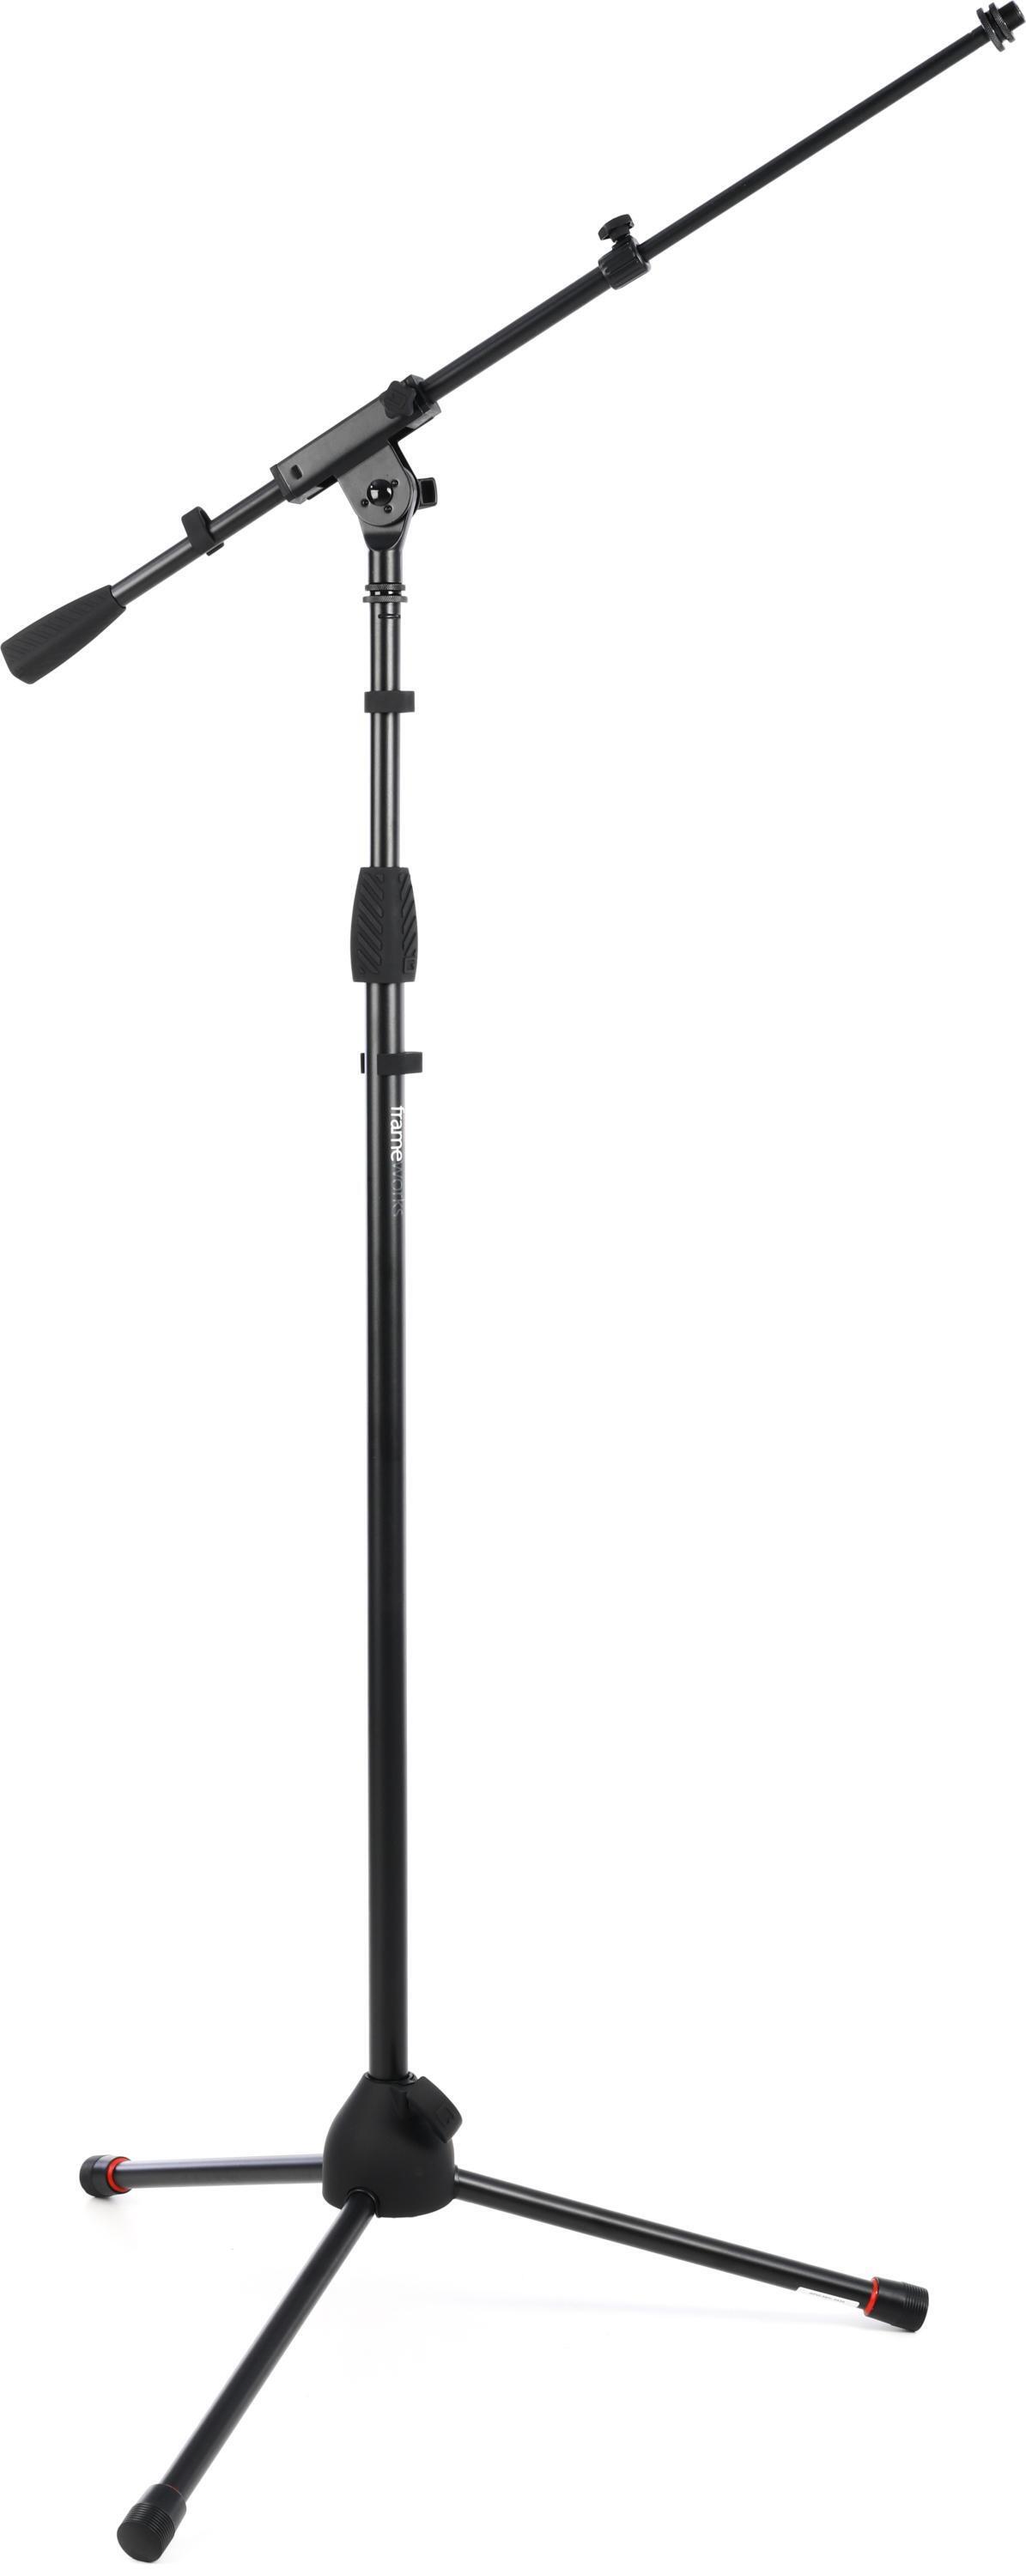 Neumann KMS 104 Plus Cardioid Condenser Handheld Vocal Microphone